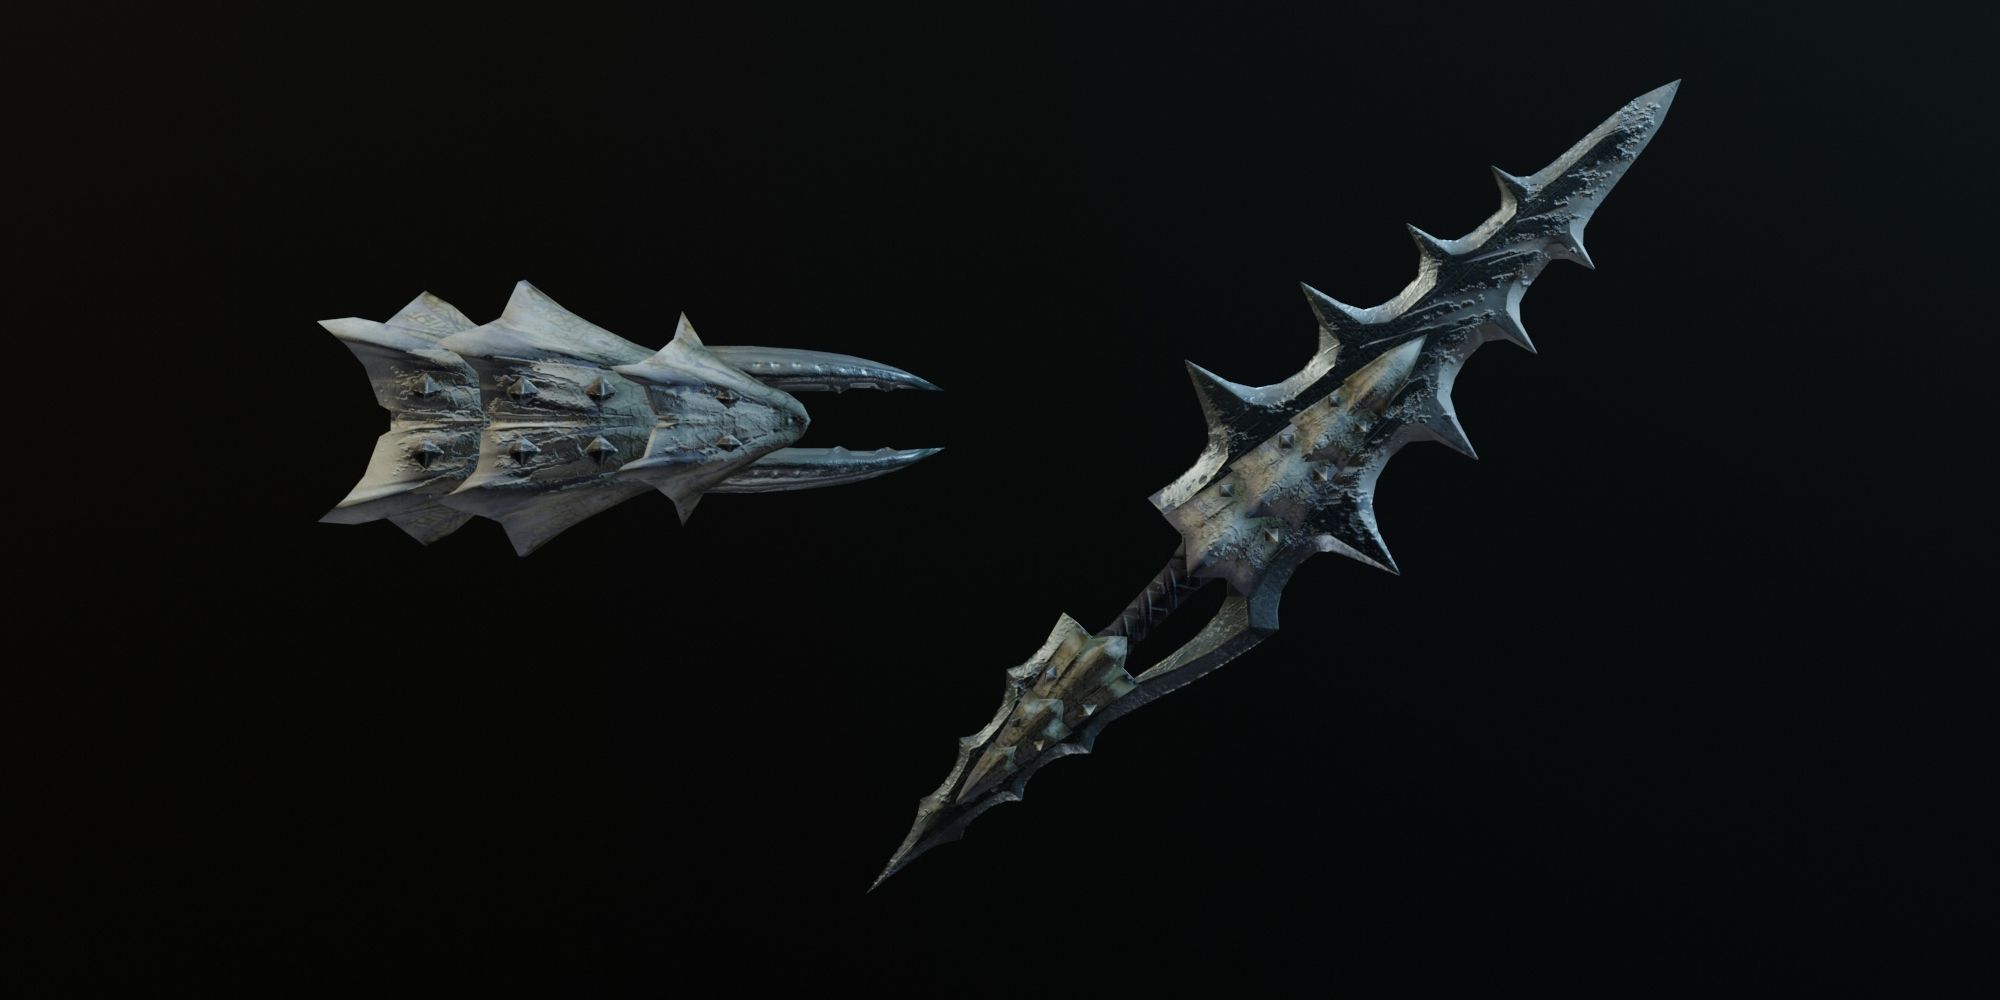 Silverbosche Sword And Shield Set